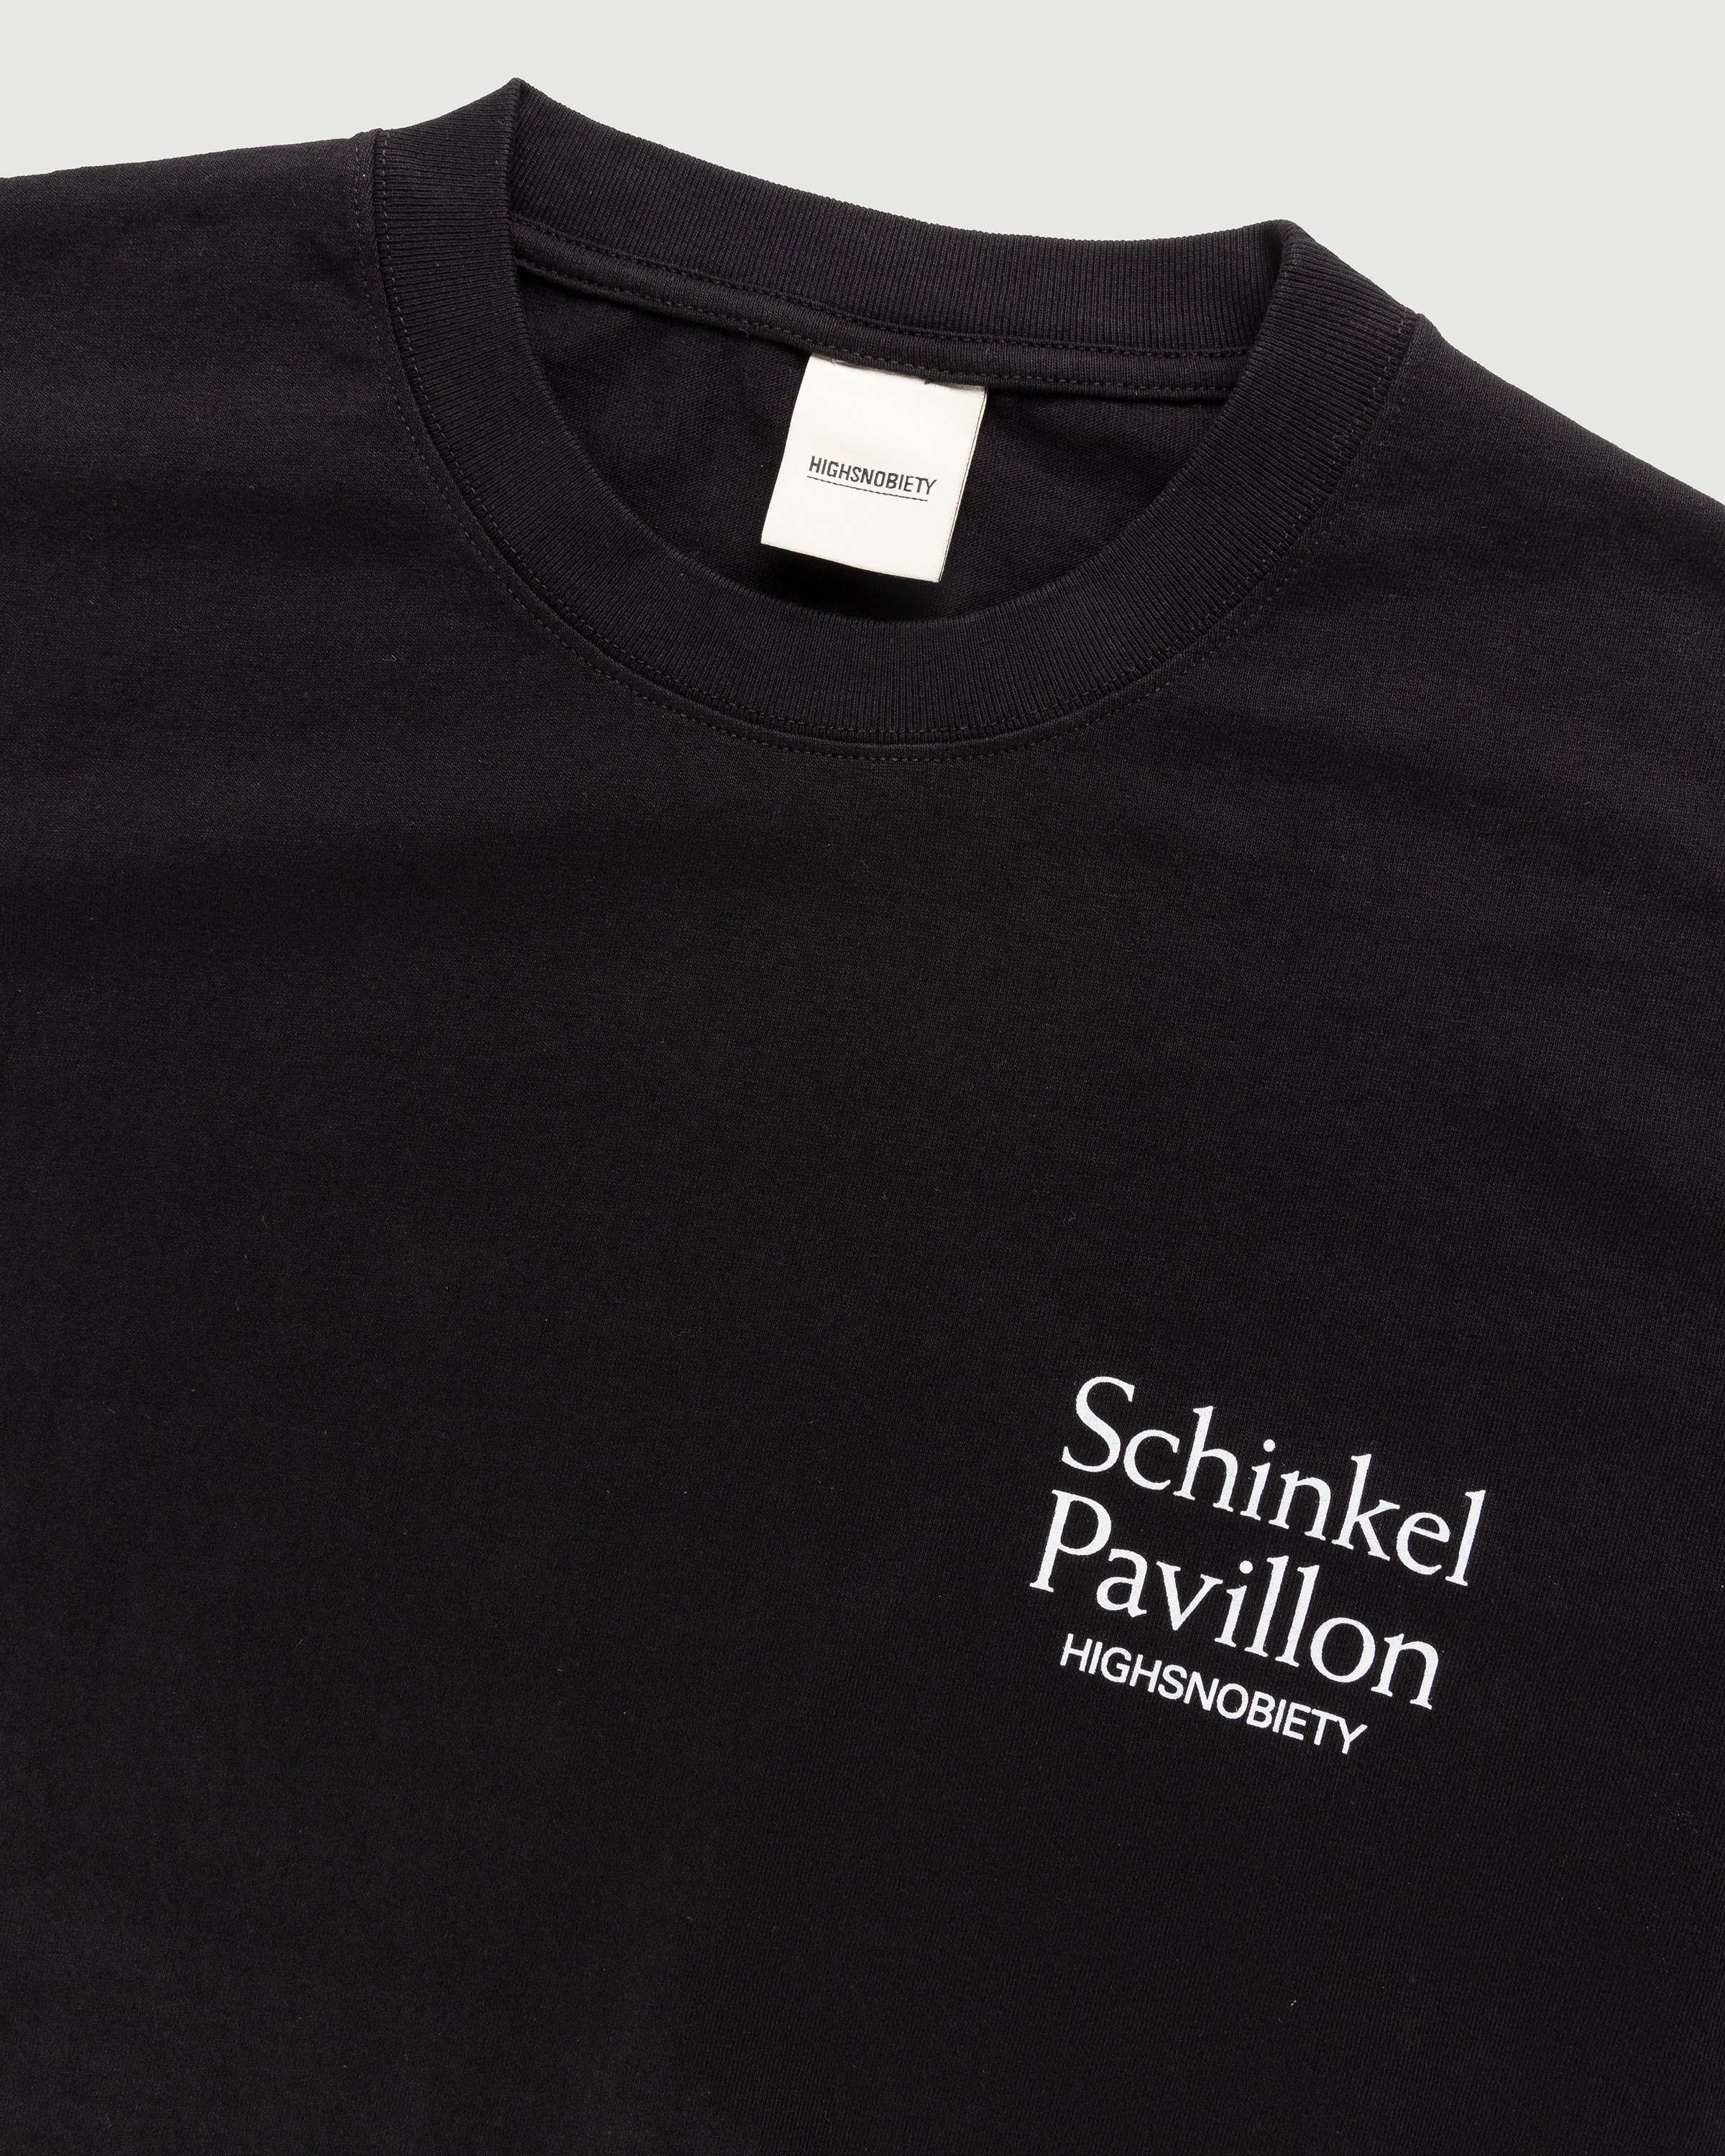 Schinkel Pavillon x Highsnobiety - BERLIN, BERLIN 3 T-Shirt Black - Clothing - Black - Image 4